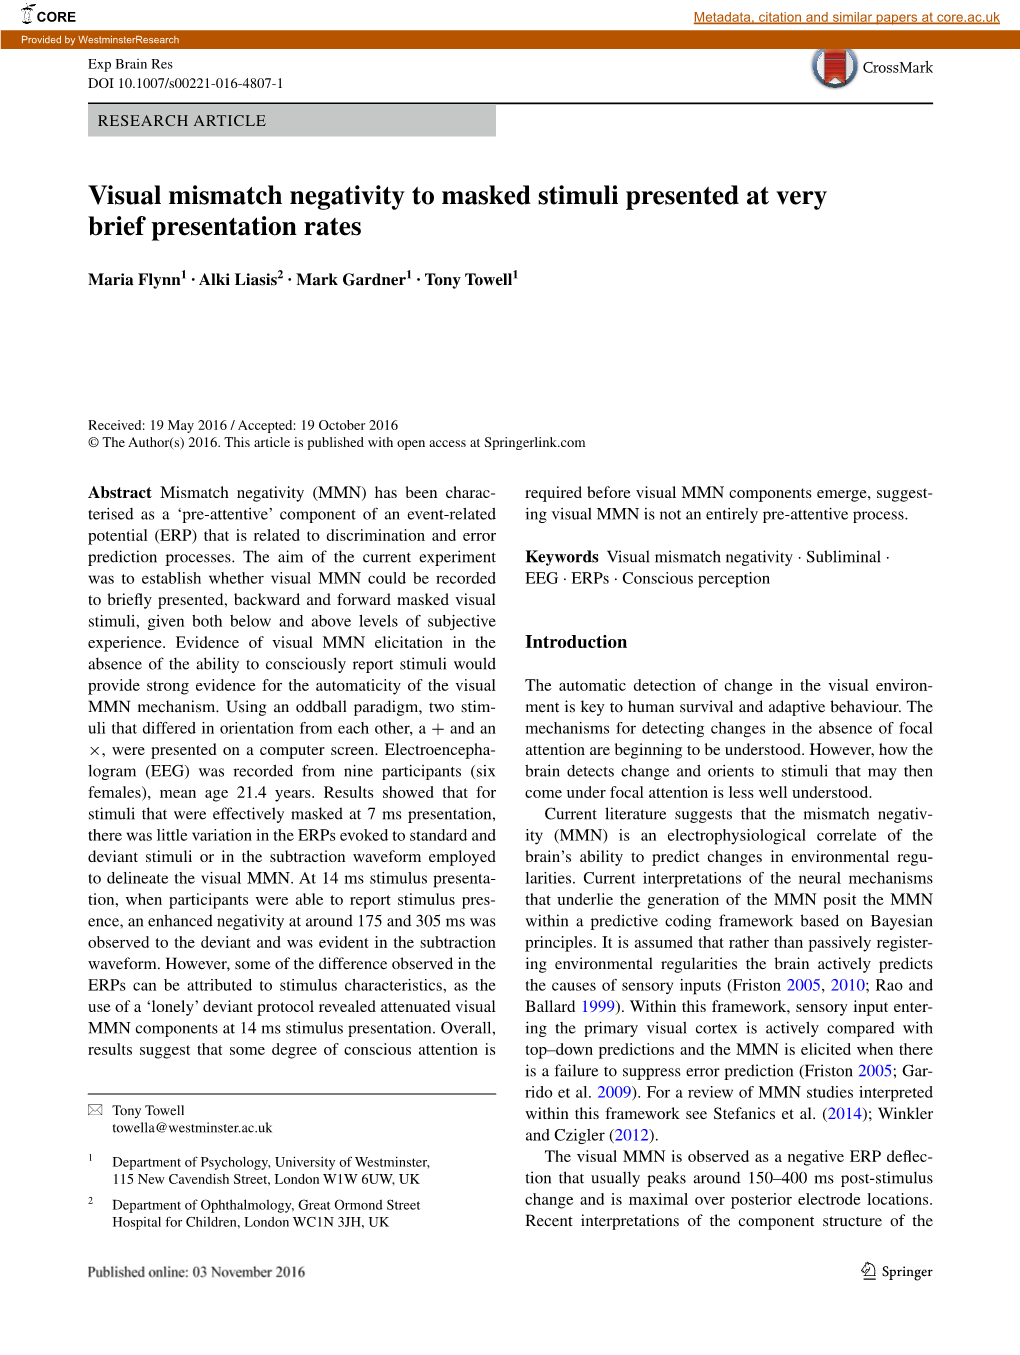 Visual Mismatch Negativity to Masked Stimuli Presented at Very Brief Presentation Rates